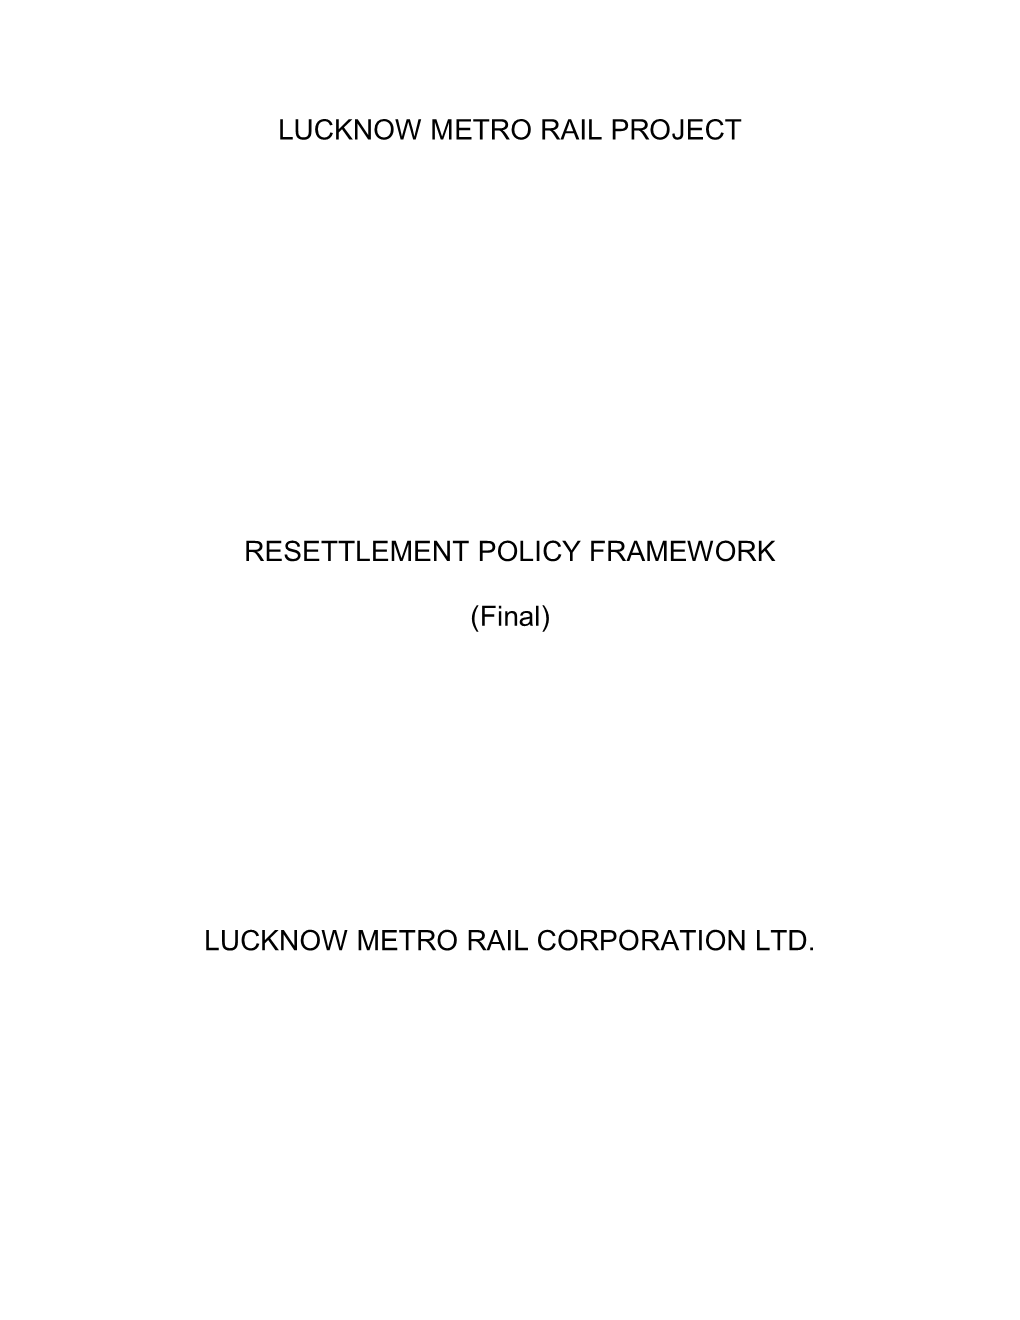 (Final) LUCKNOW METRO RAIL CORPORATION LTD